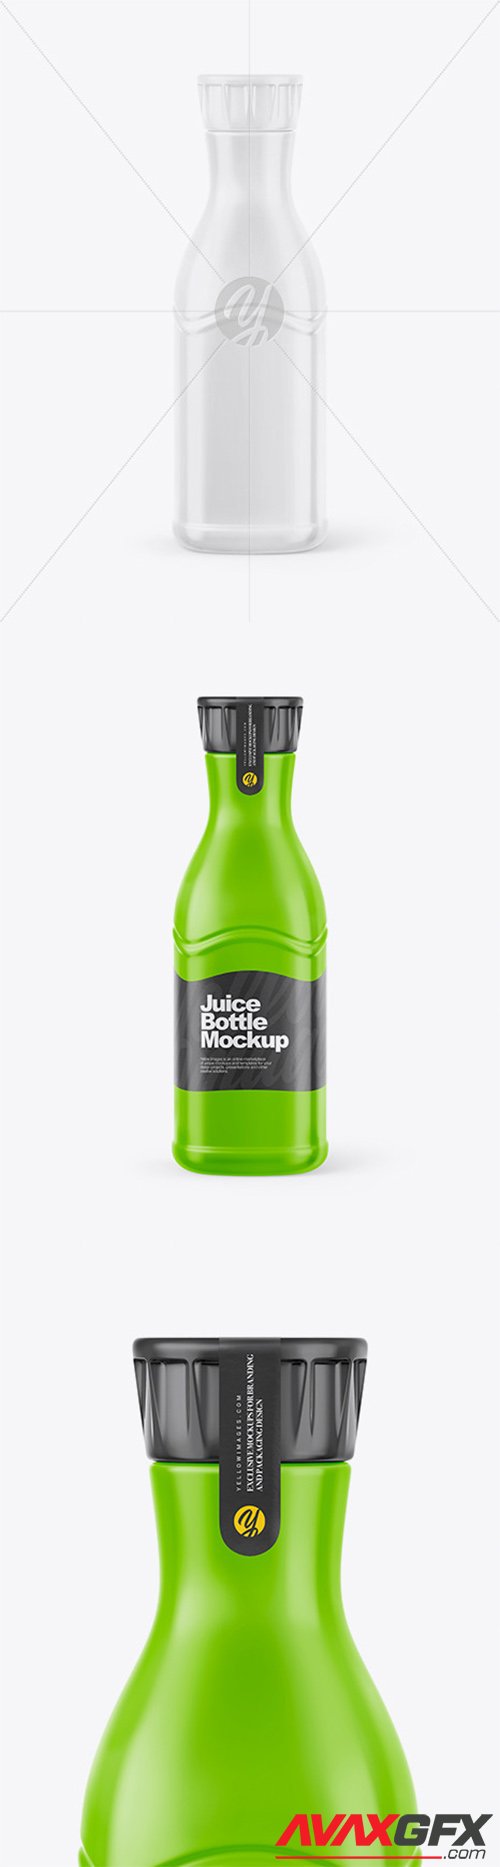 Juice Bottle Mockup - Front View 59024